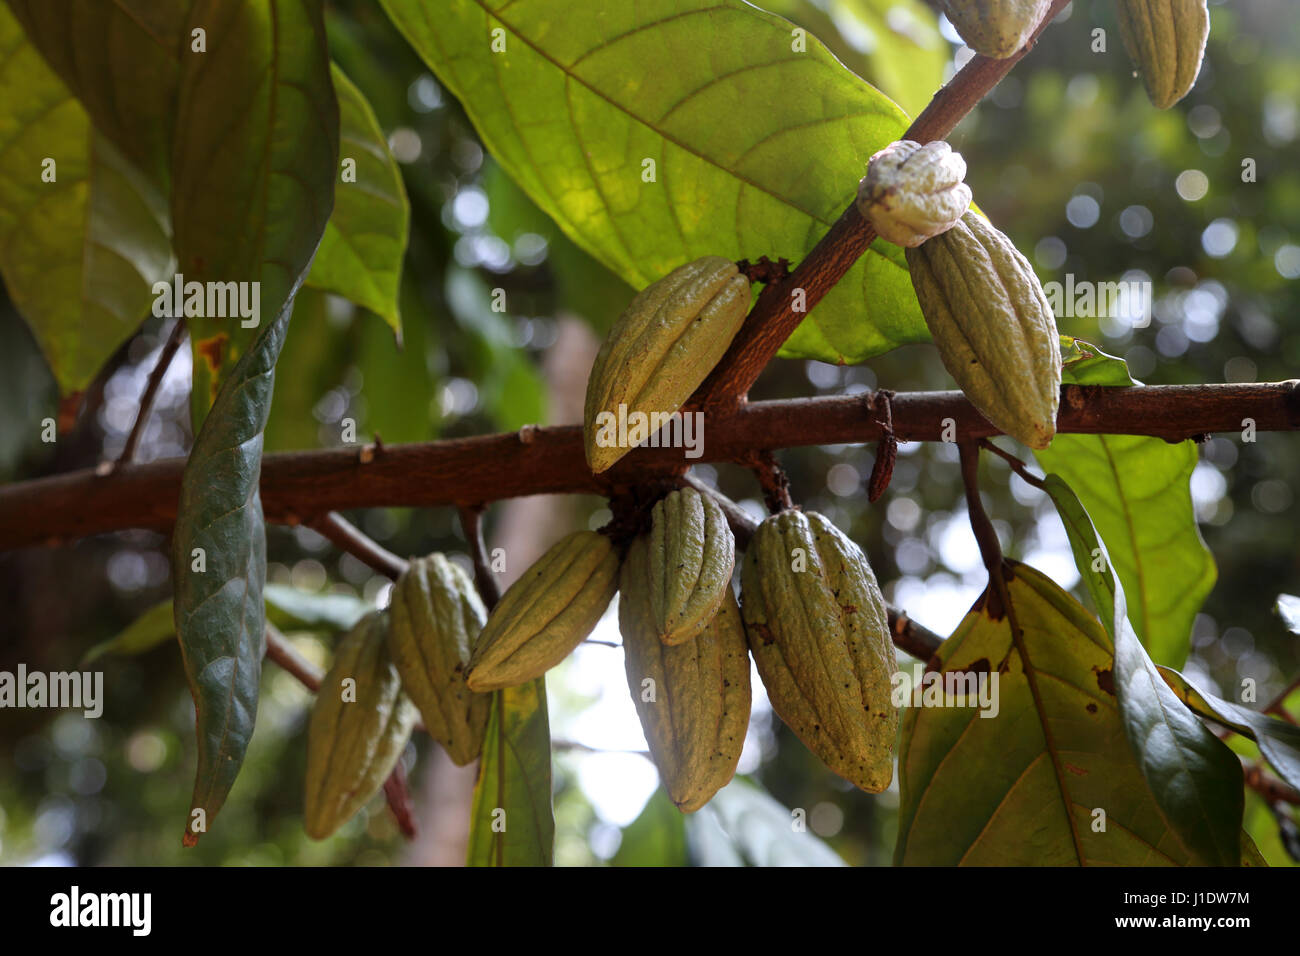 Spice Garden Sri Lanka on A9 Kandy Jaffna Highway Cocoa Pods Growing On Tree Stock Photo